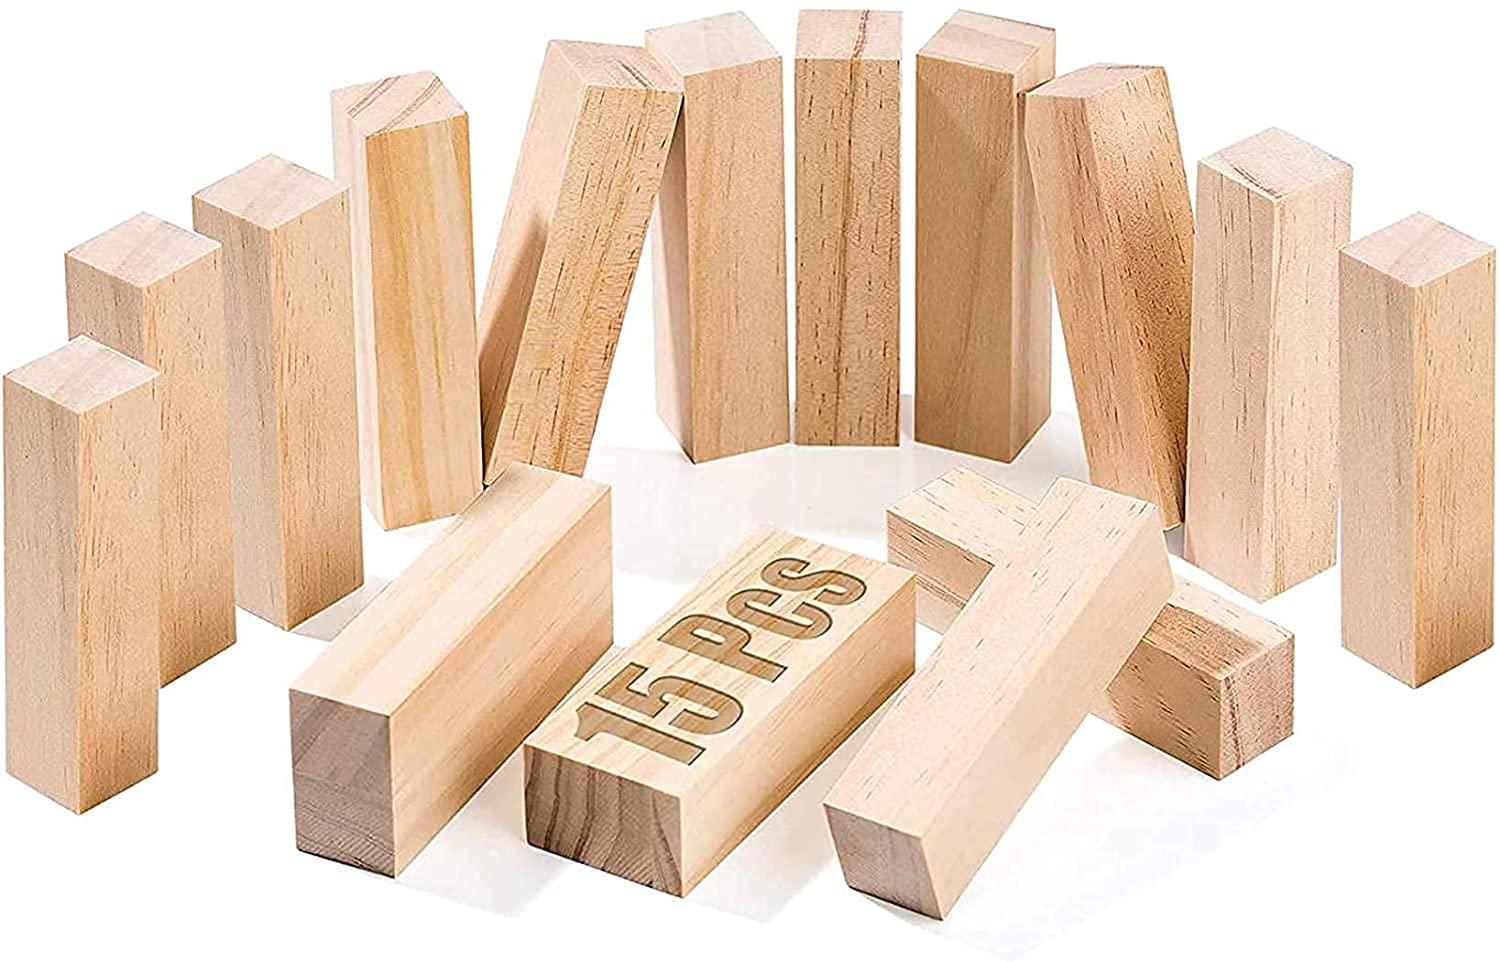 Edpas Swiss Pine Carving Wood 10 Pieces of Wood Block 10 X 2.5 X